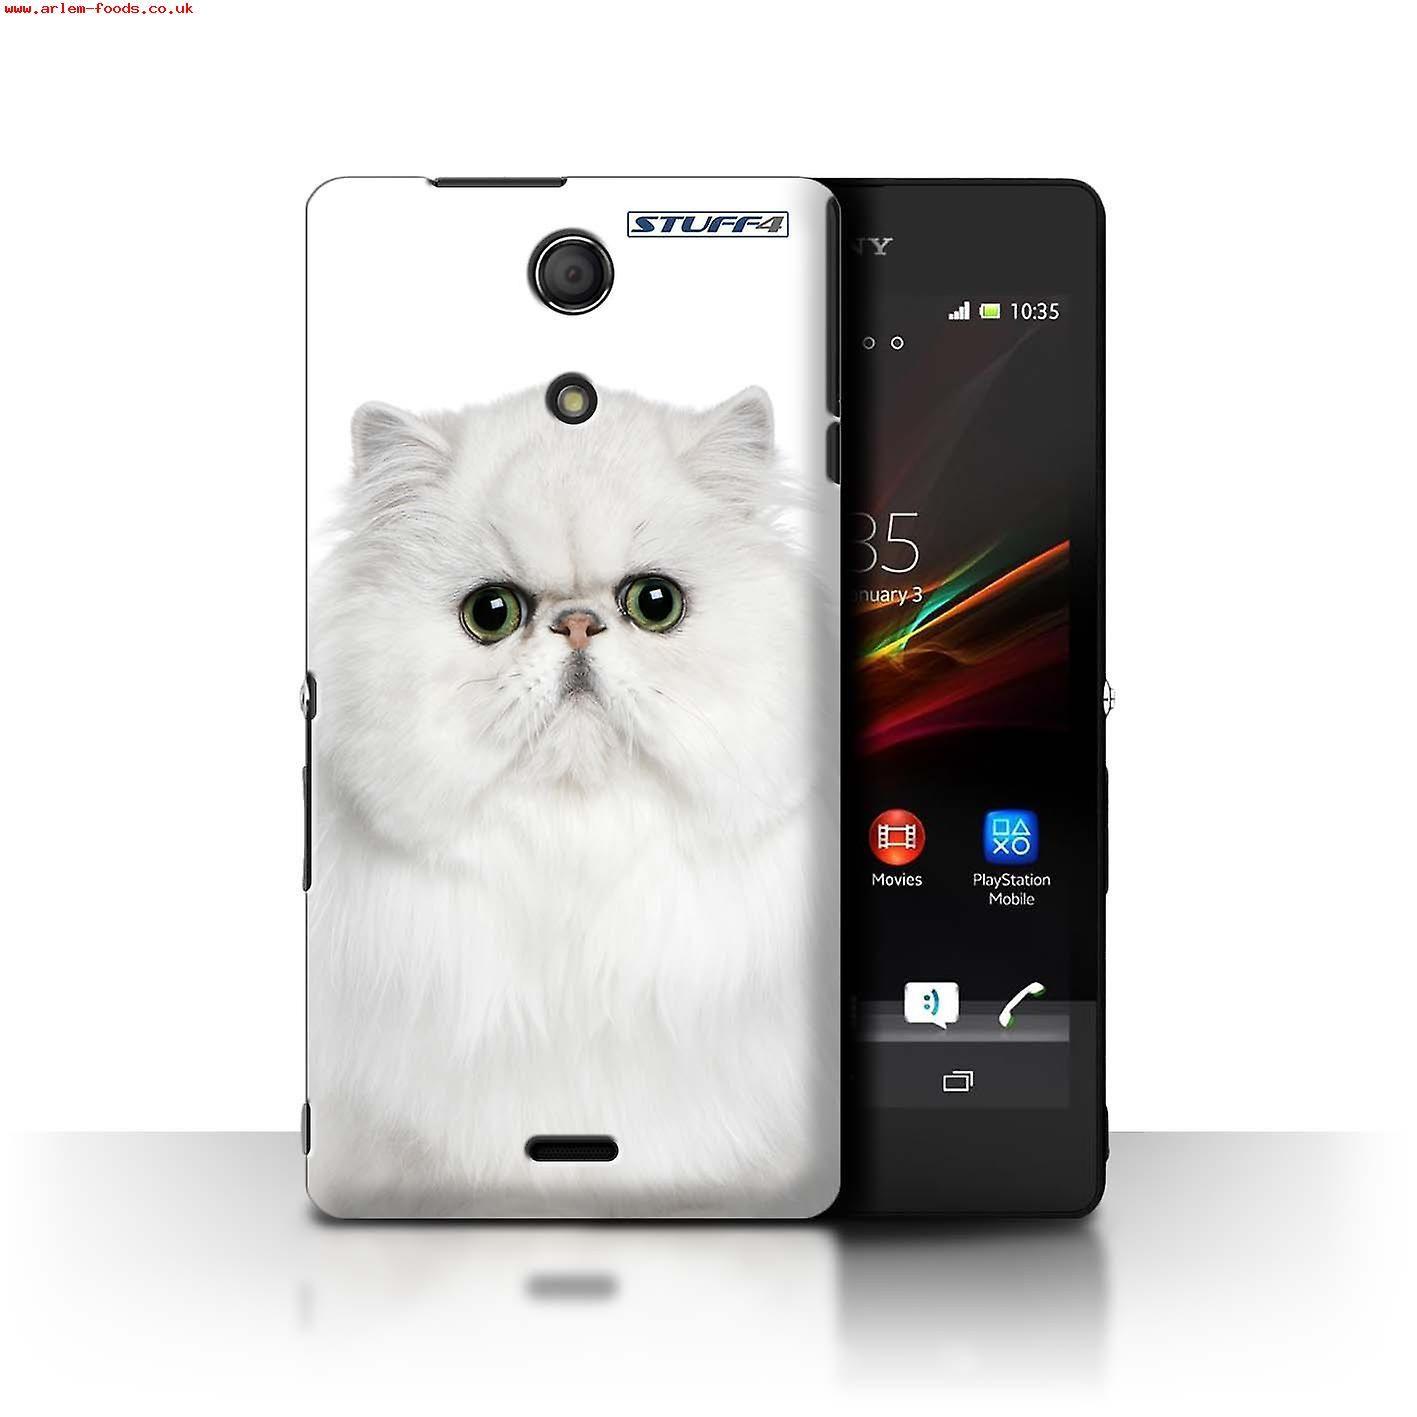 White Cat Case Logo - Good sales STUFF4 Case/Cover for Sony Xperia ZR/Persian White/Cat ...